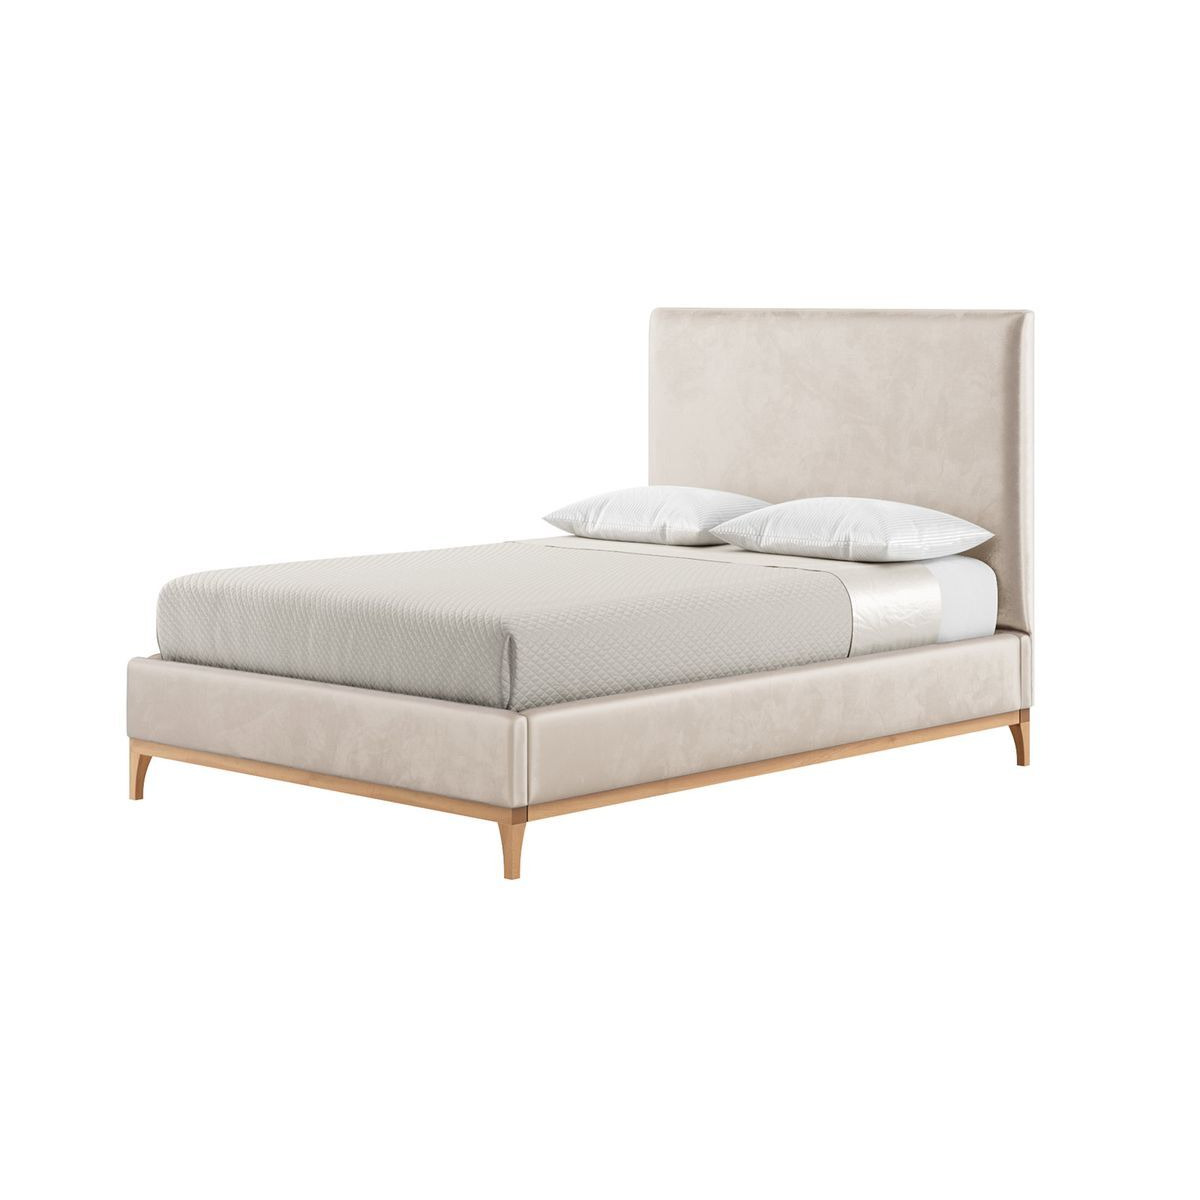 Diane 4ft6 Double Bed Frame with modern smooth headboard, light beige, Leg colour: like oak - image 1